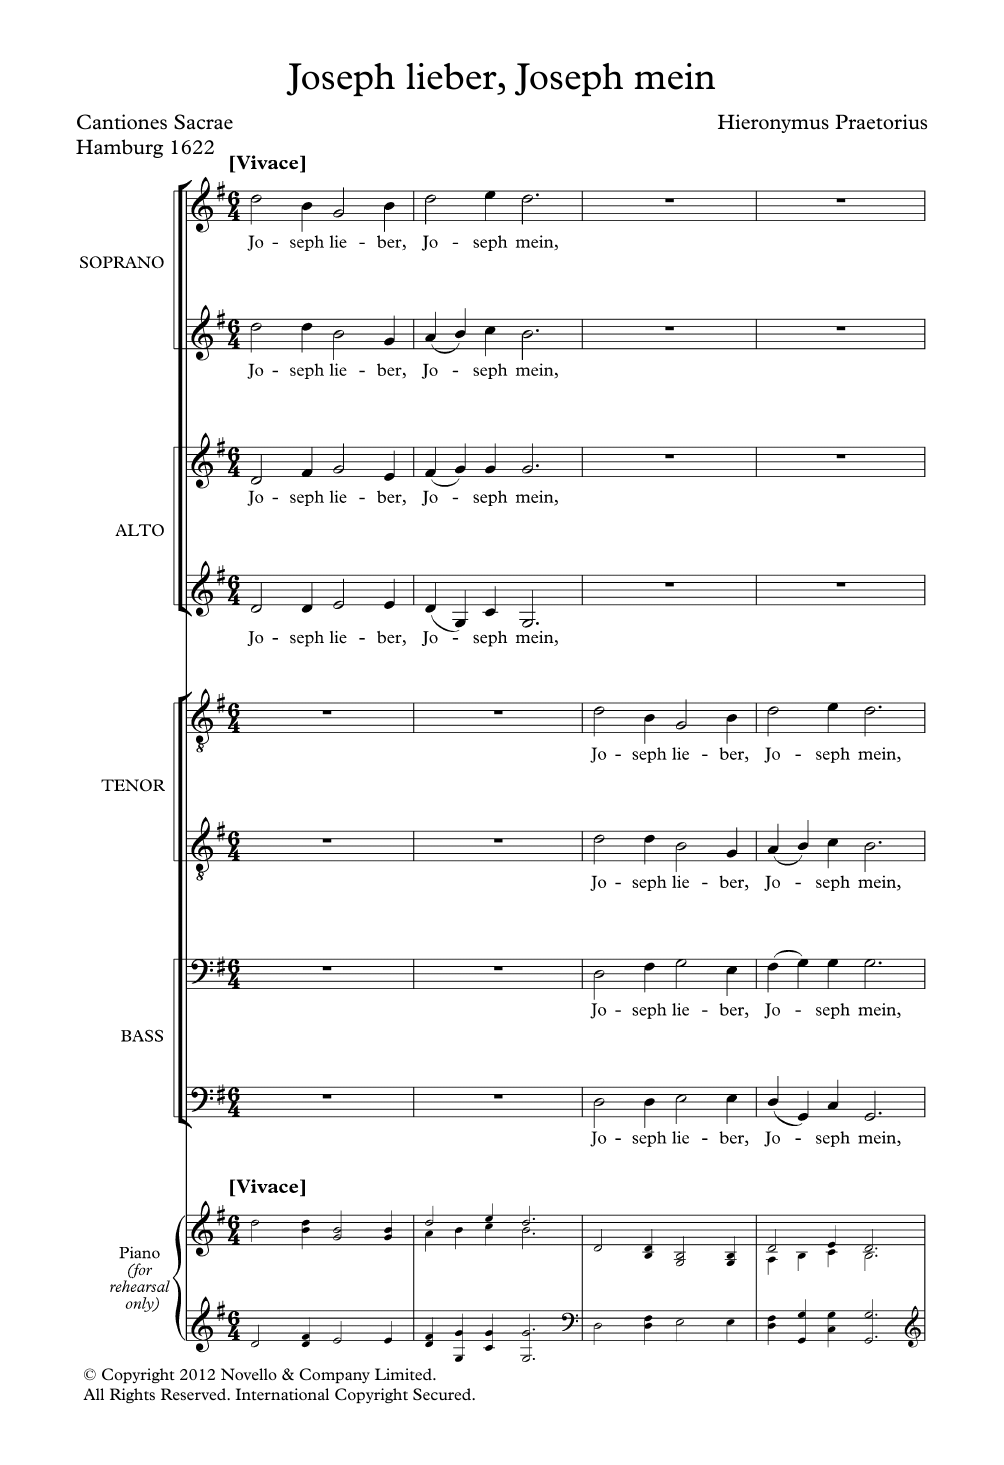 Hieronymus Praetorius Joseph, Lieber Joseph Mein Sheet Music Notes & Chords for Choir - Download or Print PDF